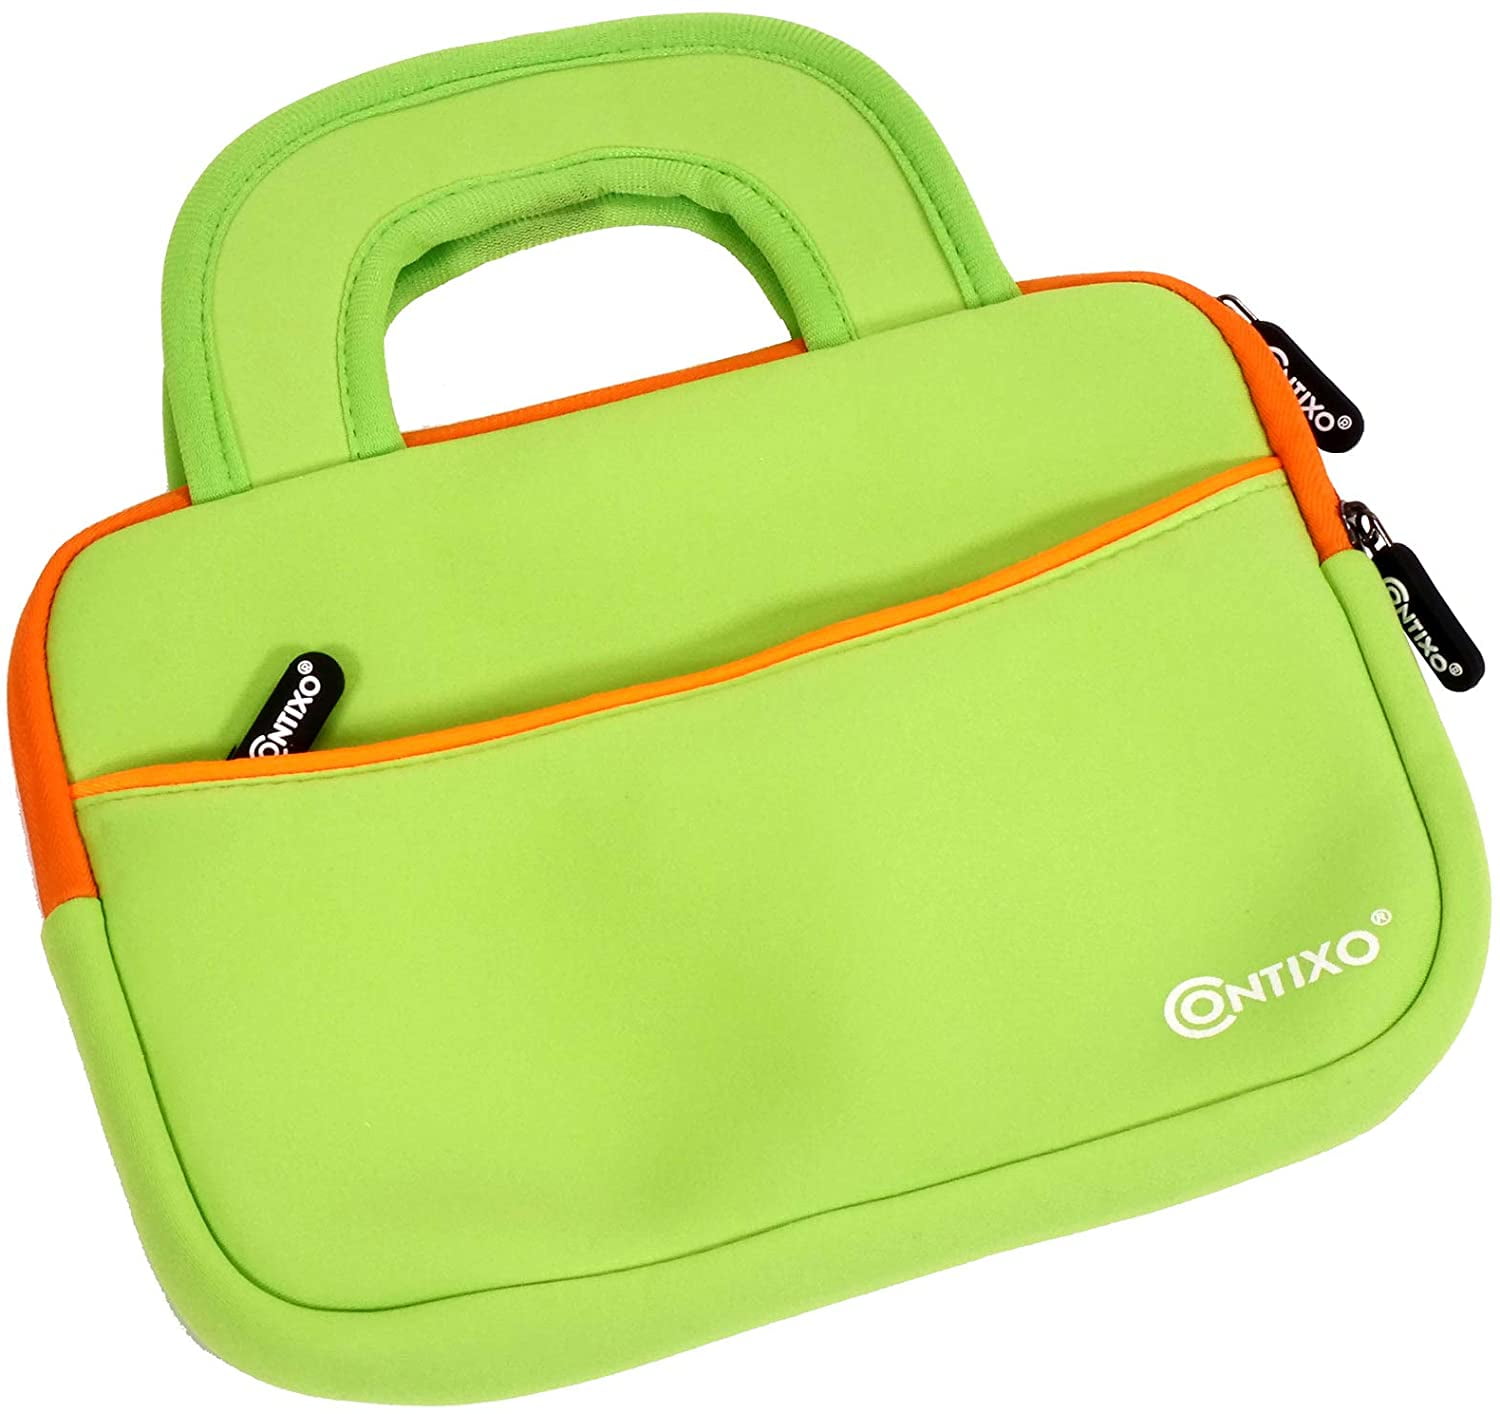 Pardon Netto Vel Contixo 10 Inch Tablet Sleeve Bag Compatible for Contixo K101/K101A Kids  Tablet (Green) - Walmart.com